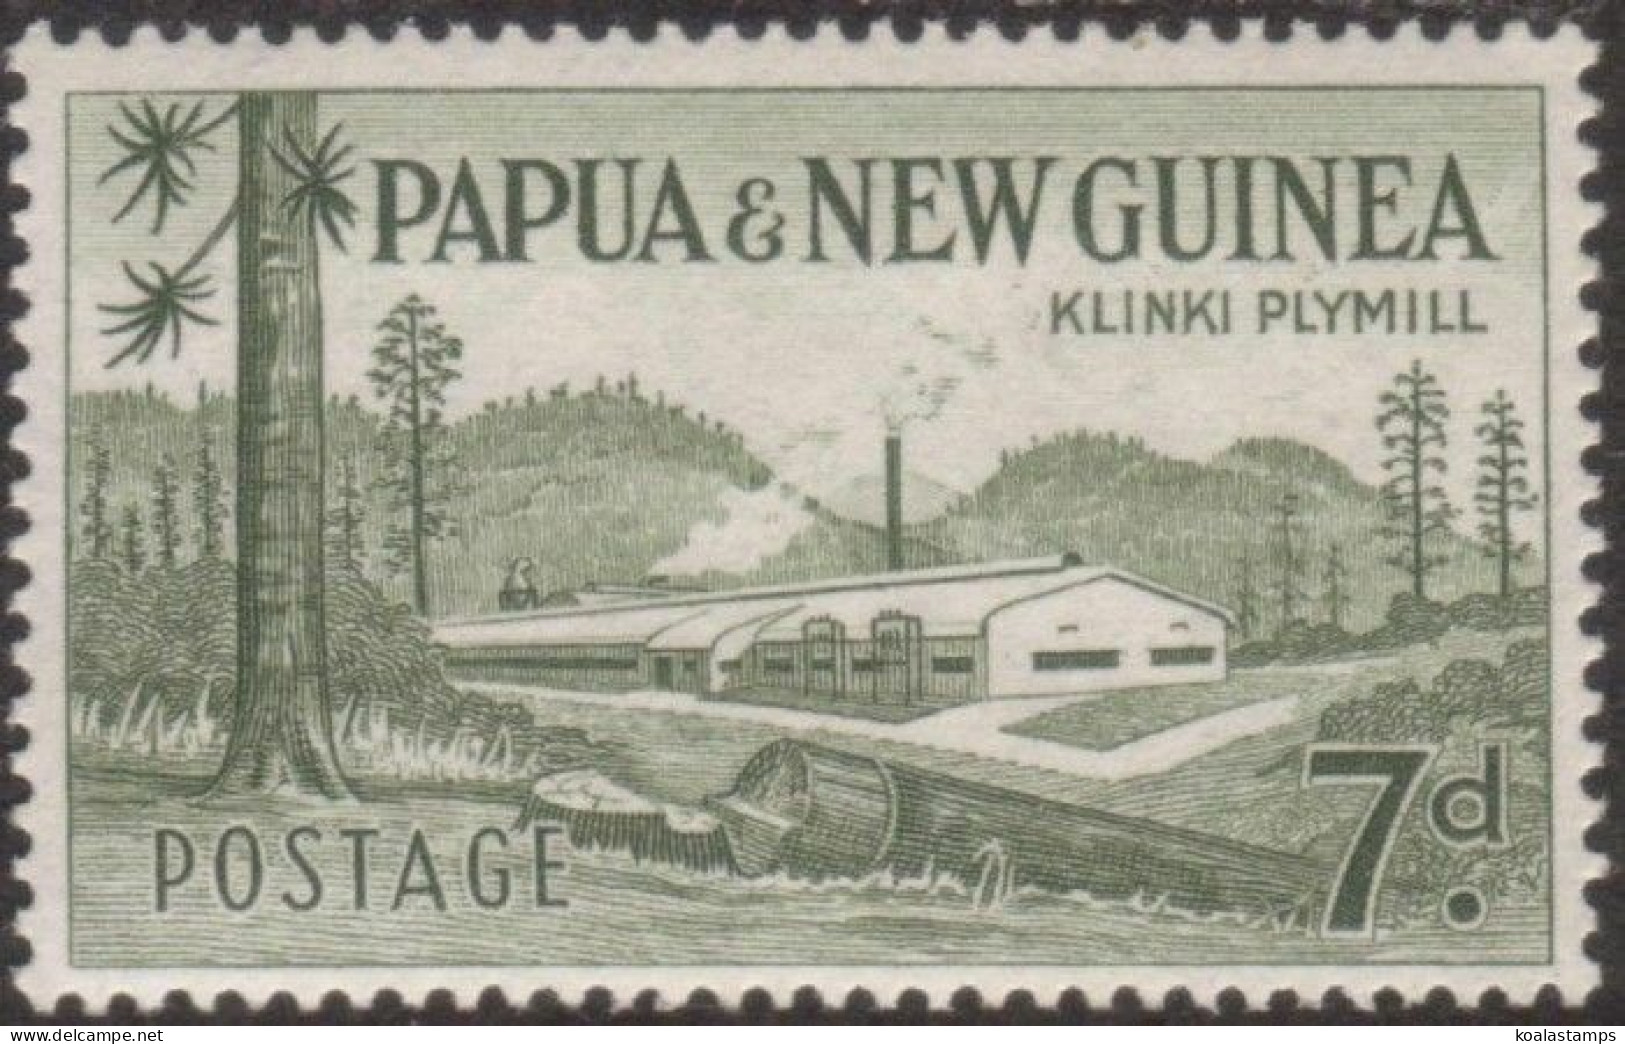 Papua New Guinea 1958 SG20 7d Klinki Plymill MNH - Papua New Guinea